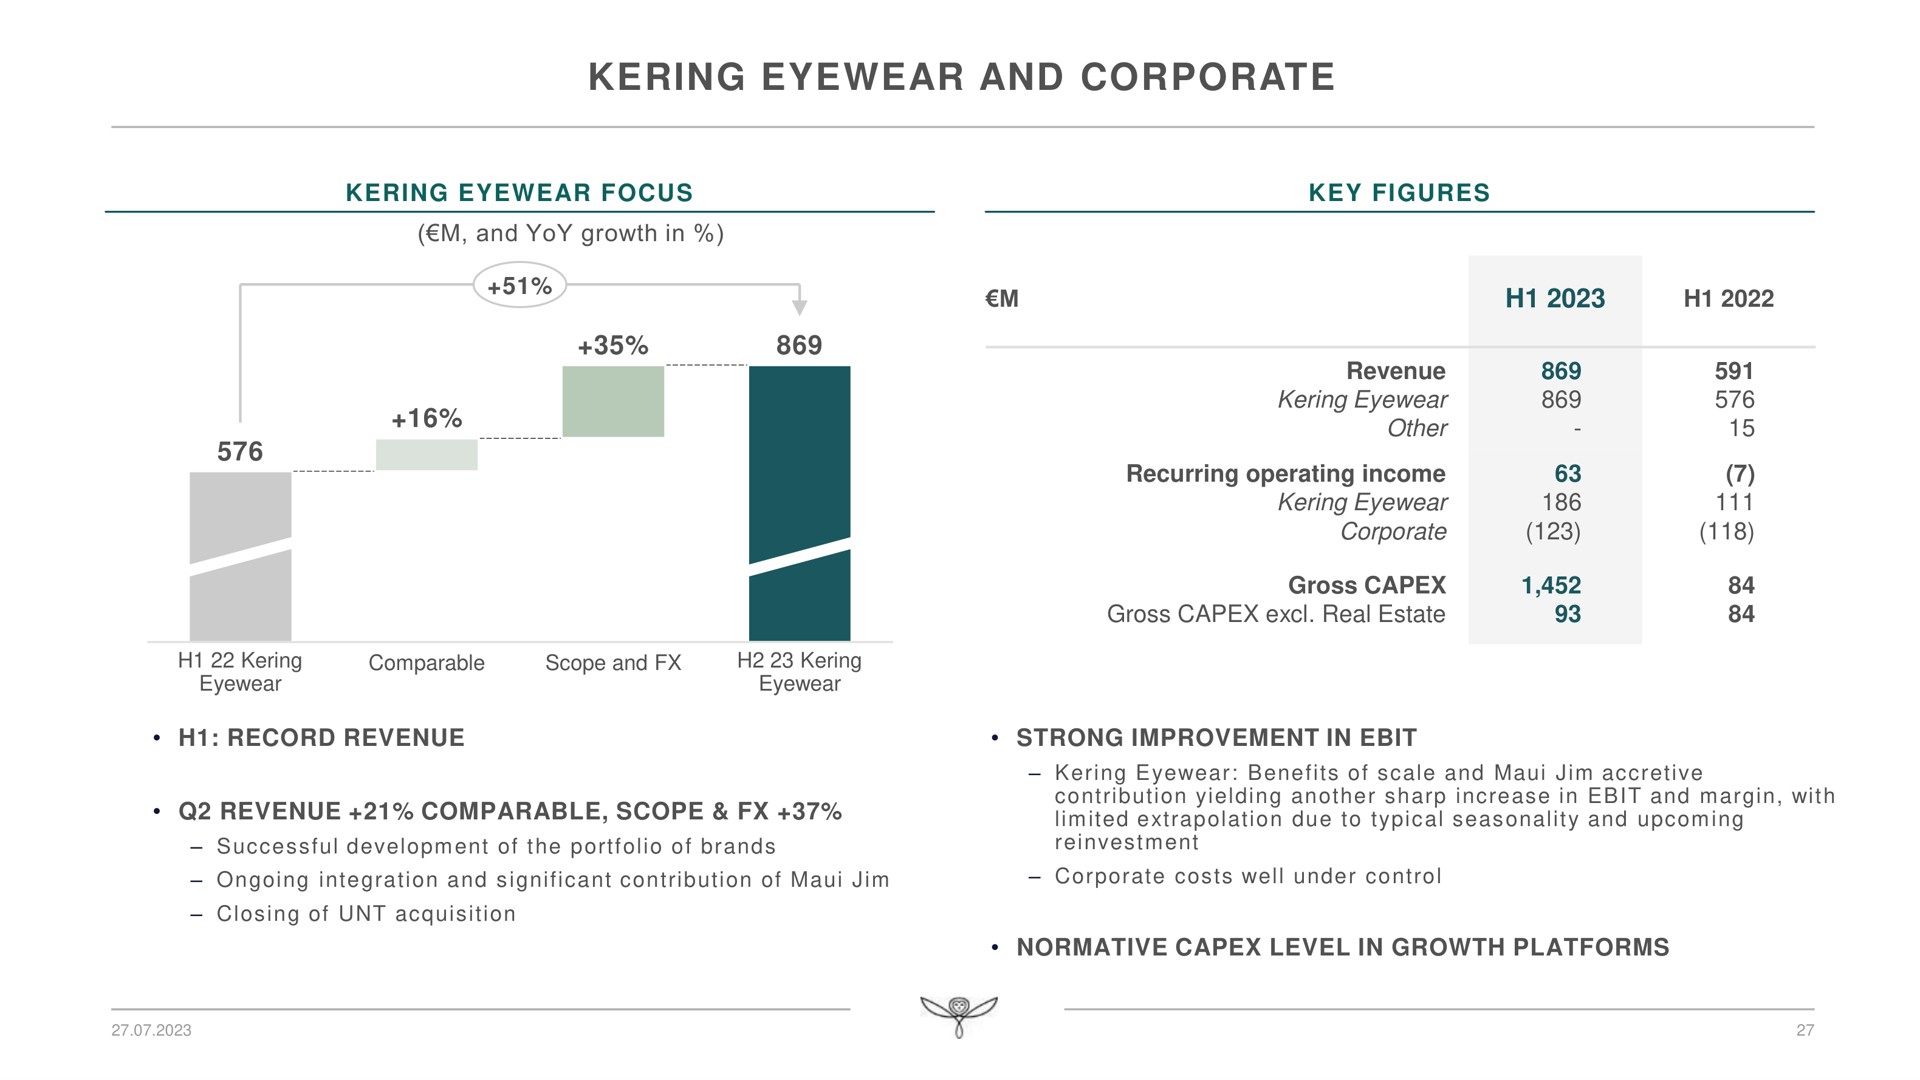 eyewear and corporate | Kering